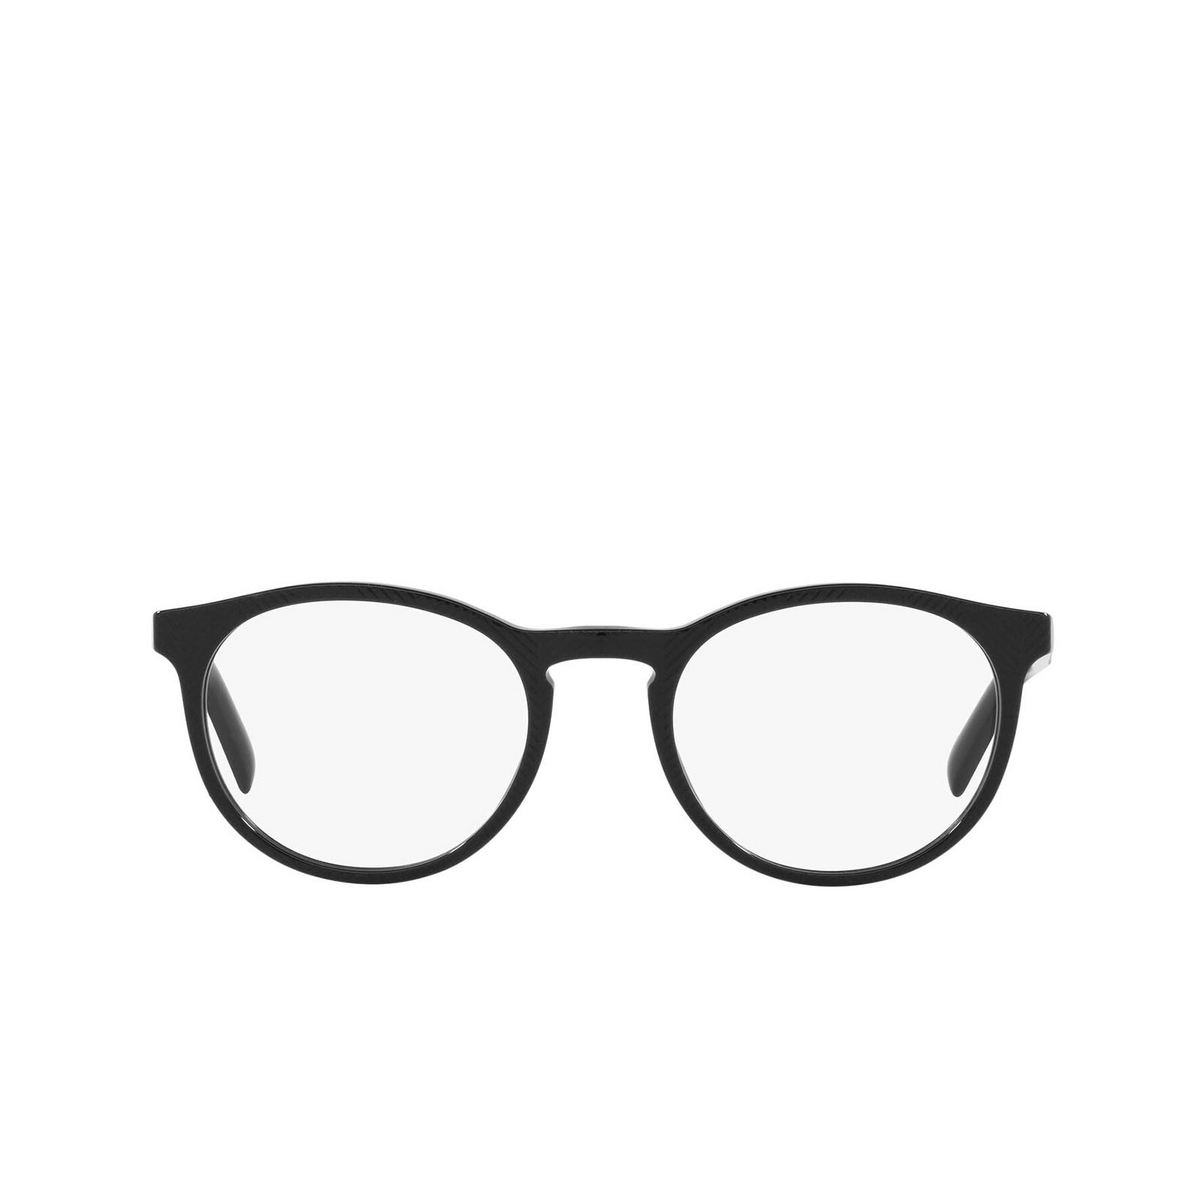 Dolce & Gabbana® Round Eyeglasses: DG3309 color Nero Texture Spigato 3298 - front view.